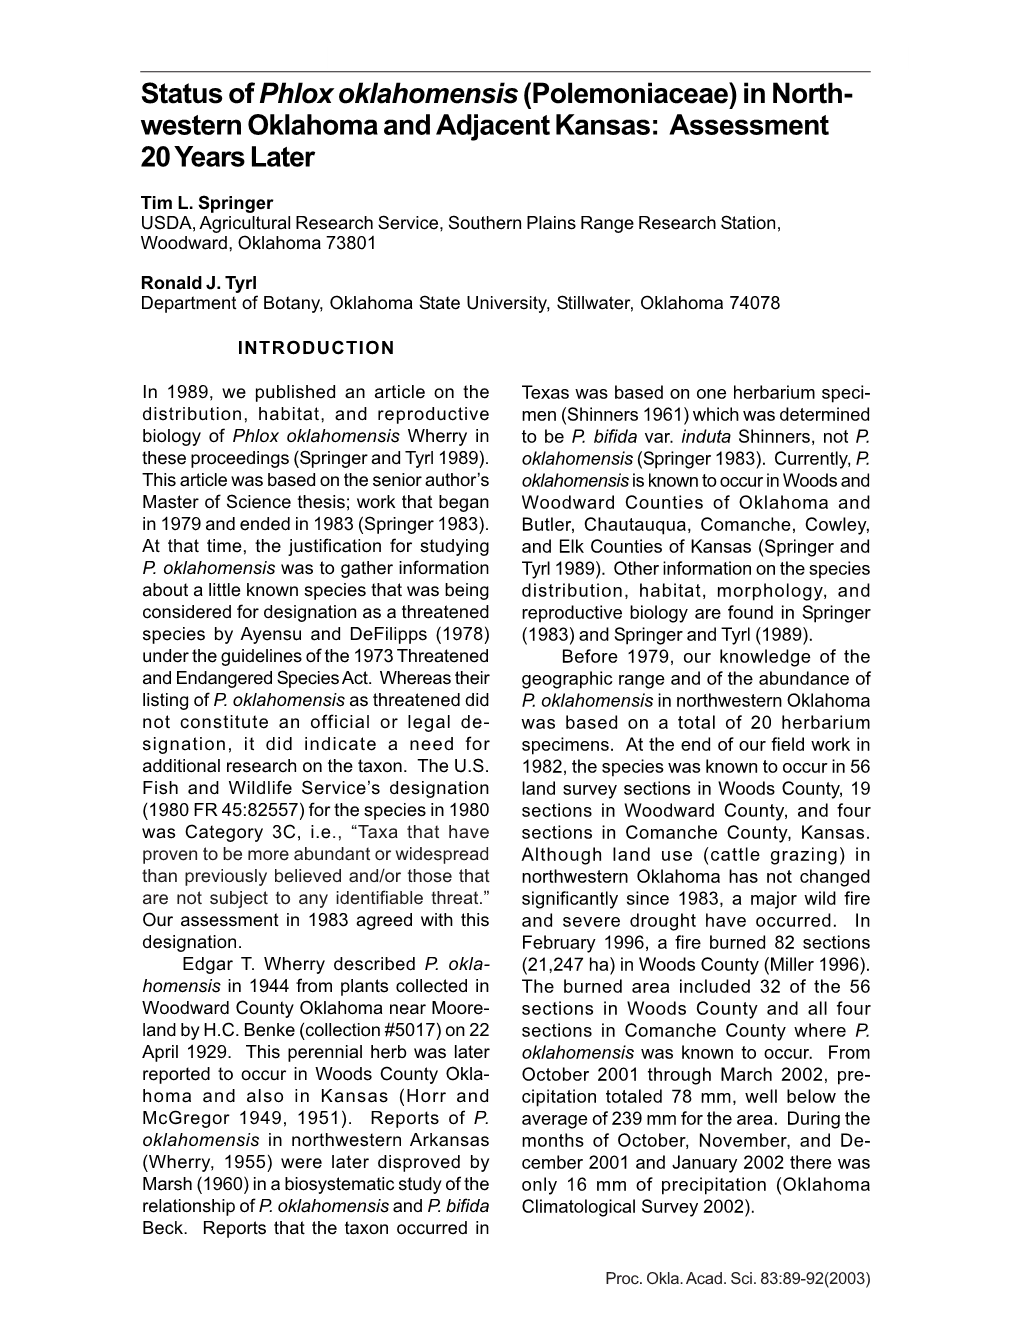 Status of Phlox Oklahomensis (Polemoniaceae) in Northwestern Oklahoma and Adjacent Kansas: Assessment 20 Years Later